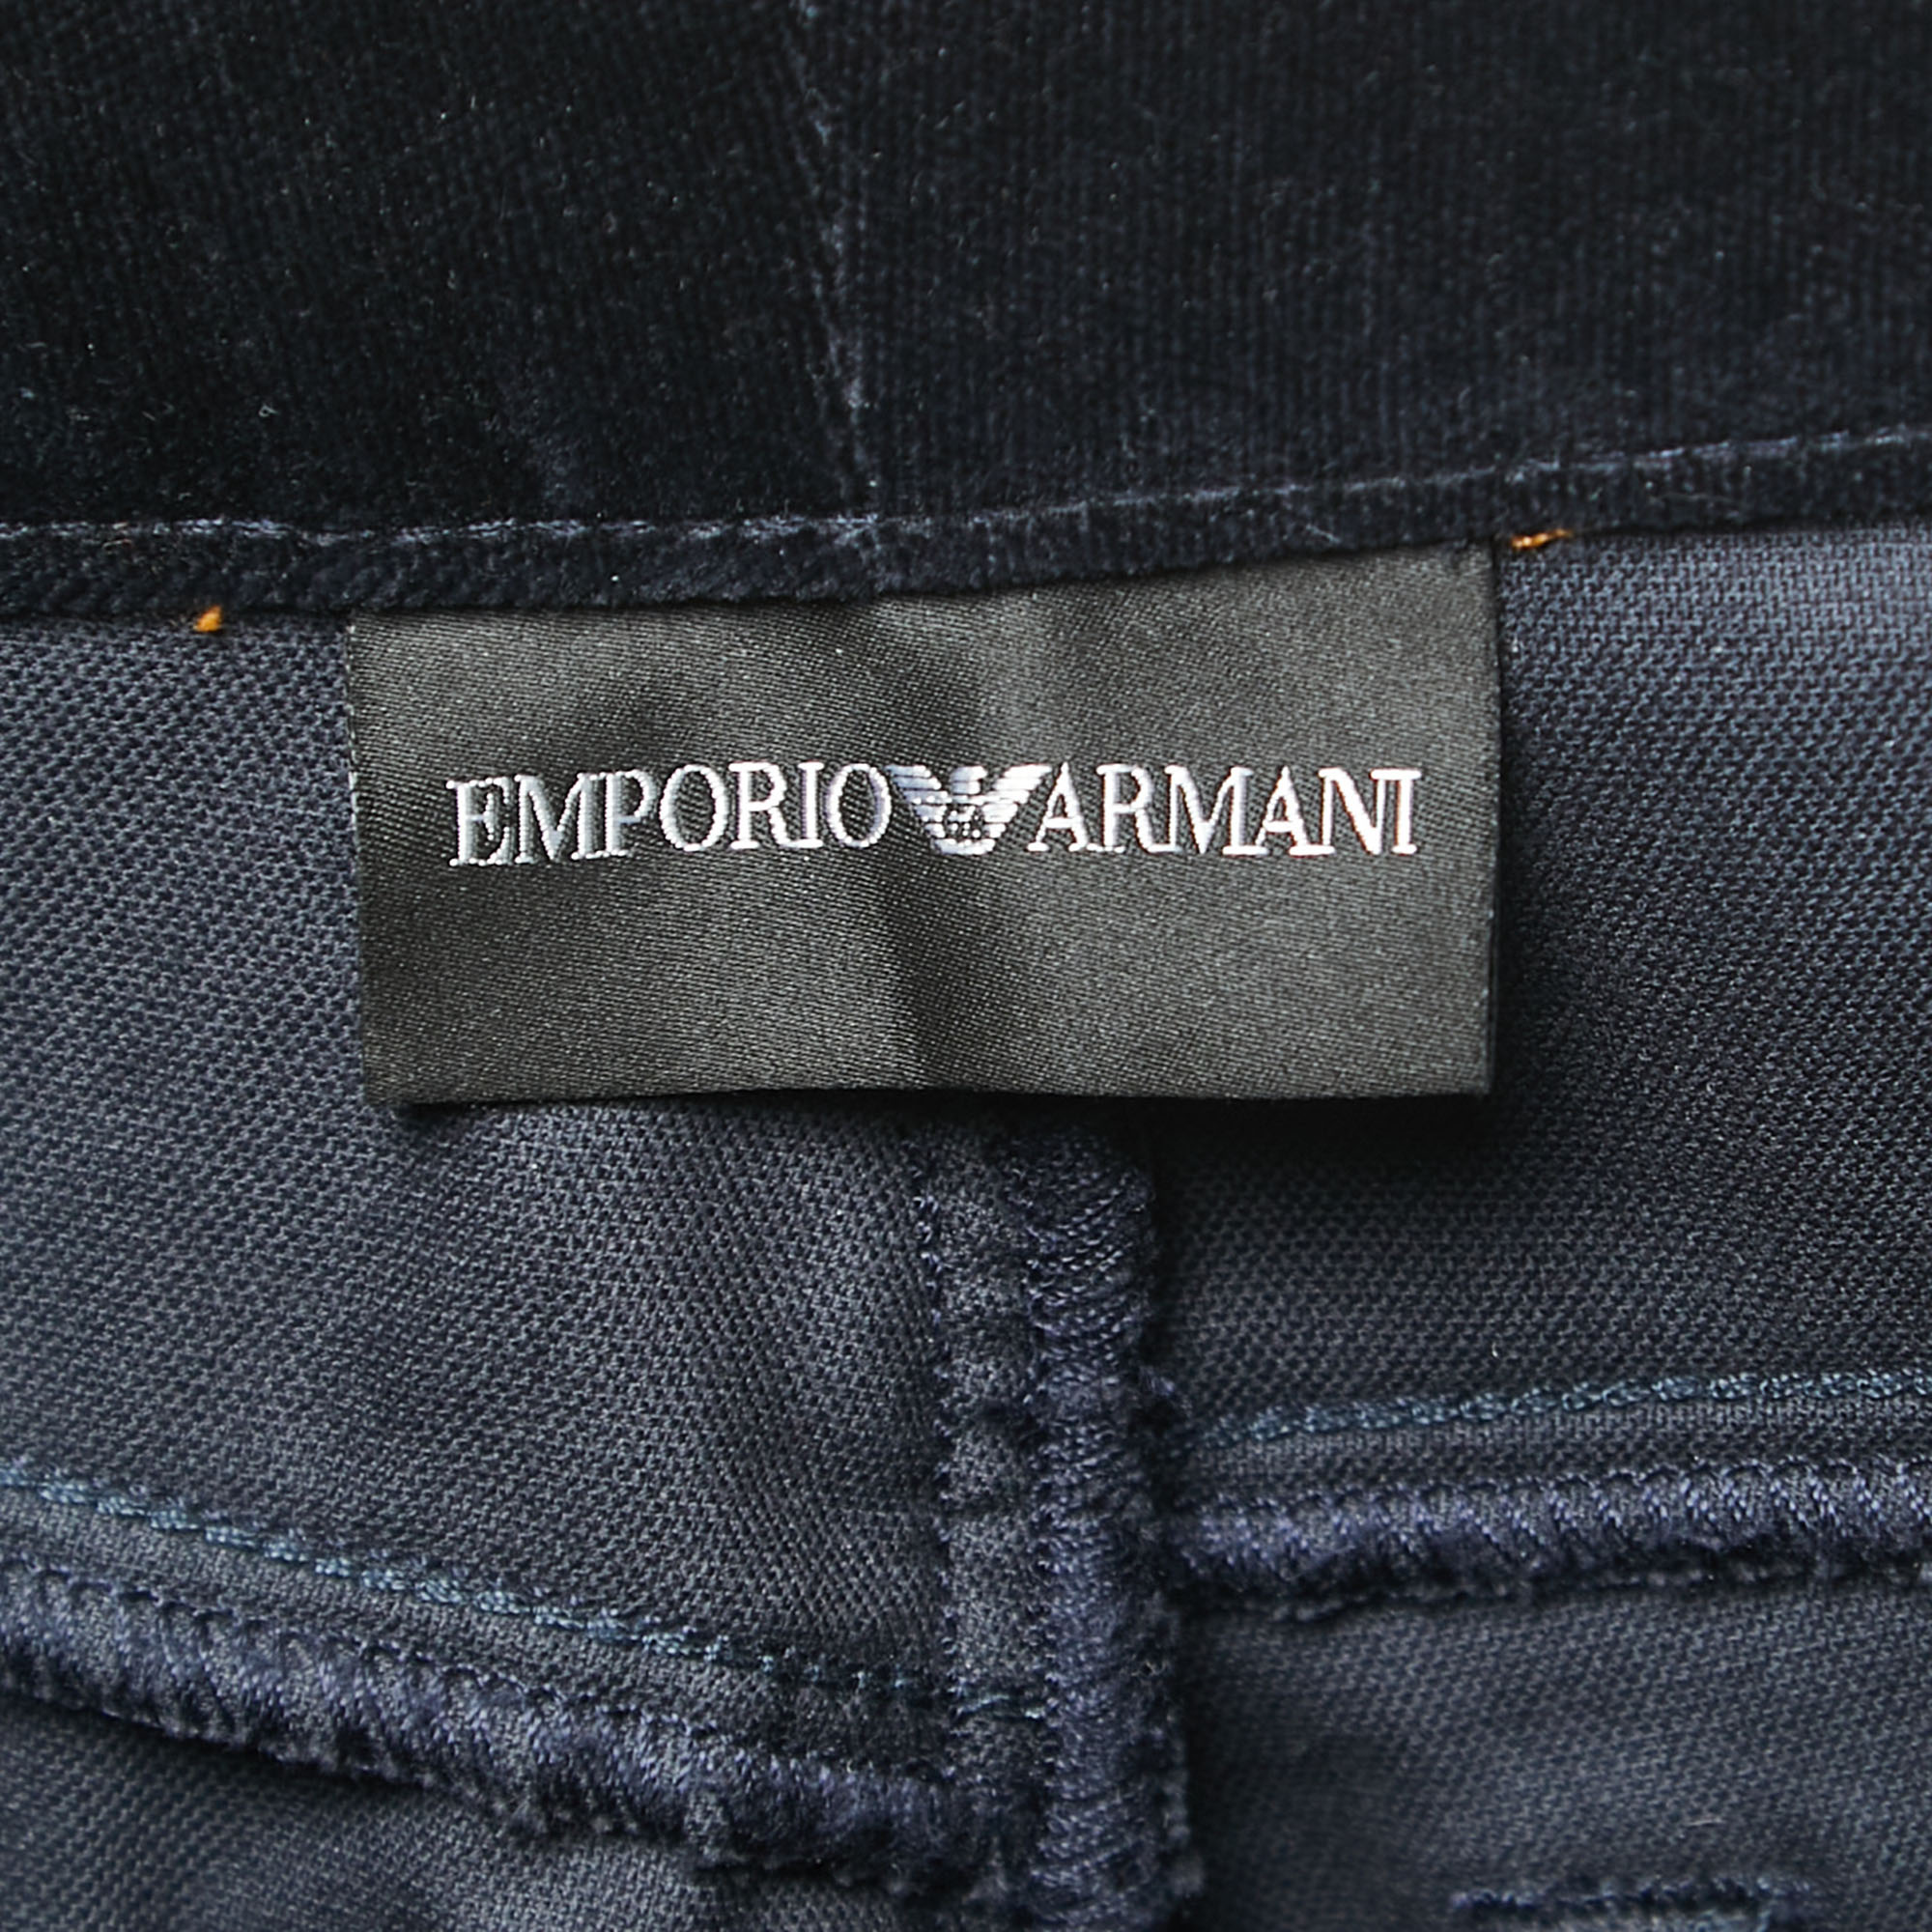 Emporio Armani Navy Blue Velvet Jeans S Waist 26